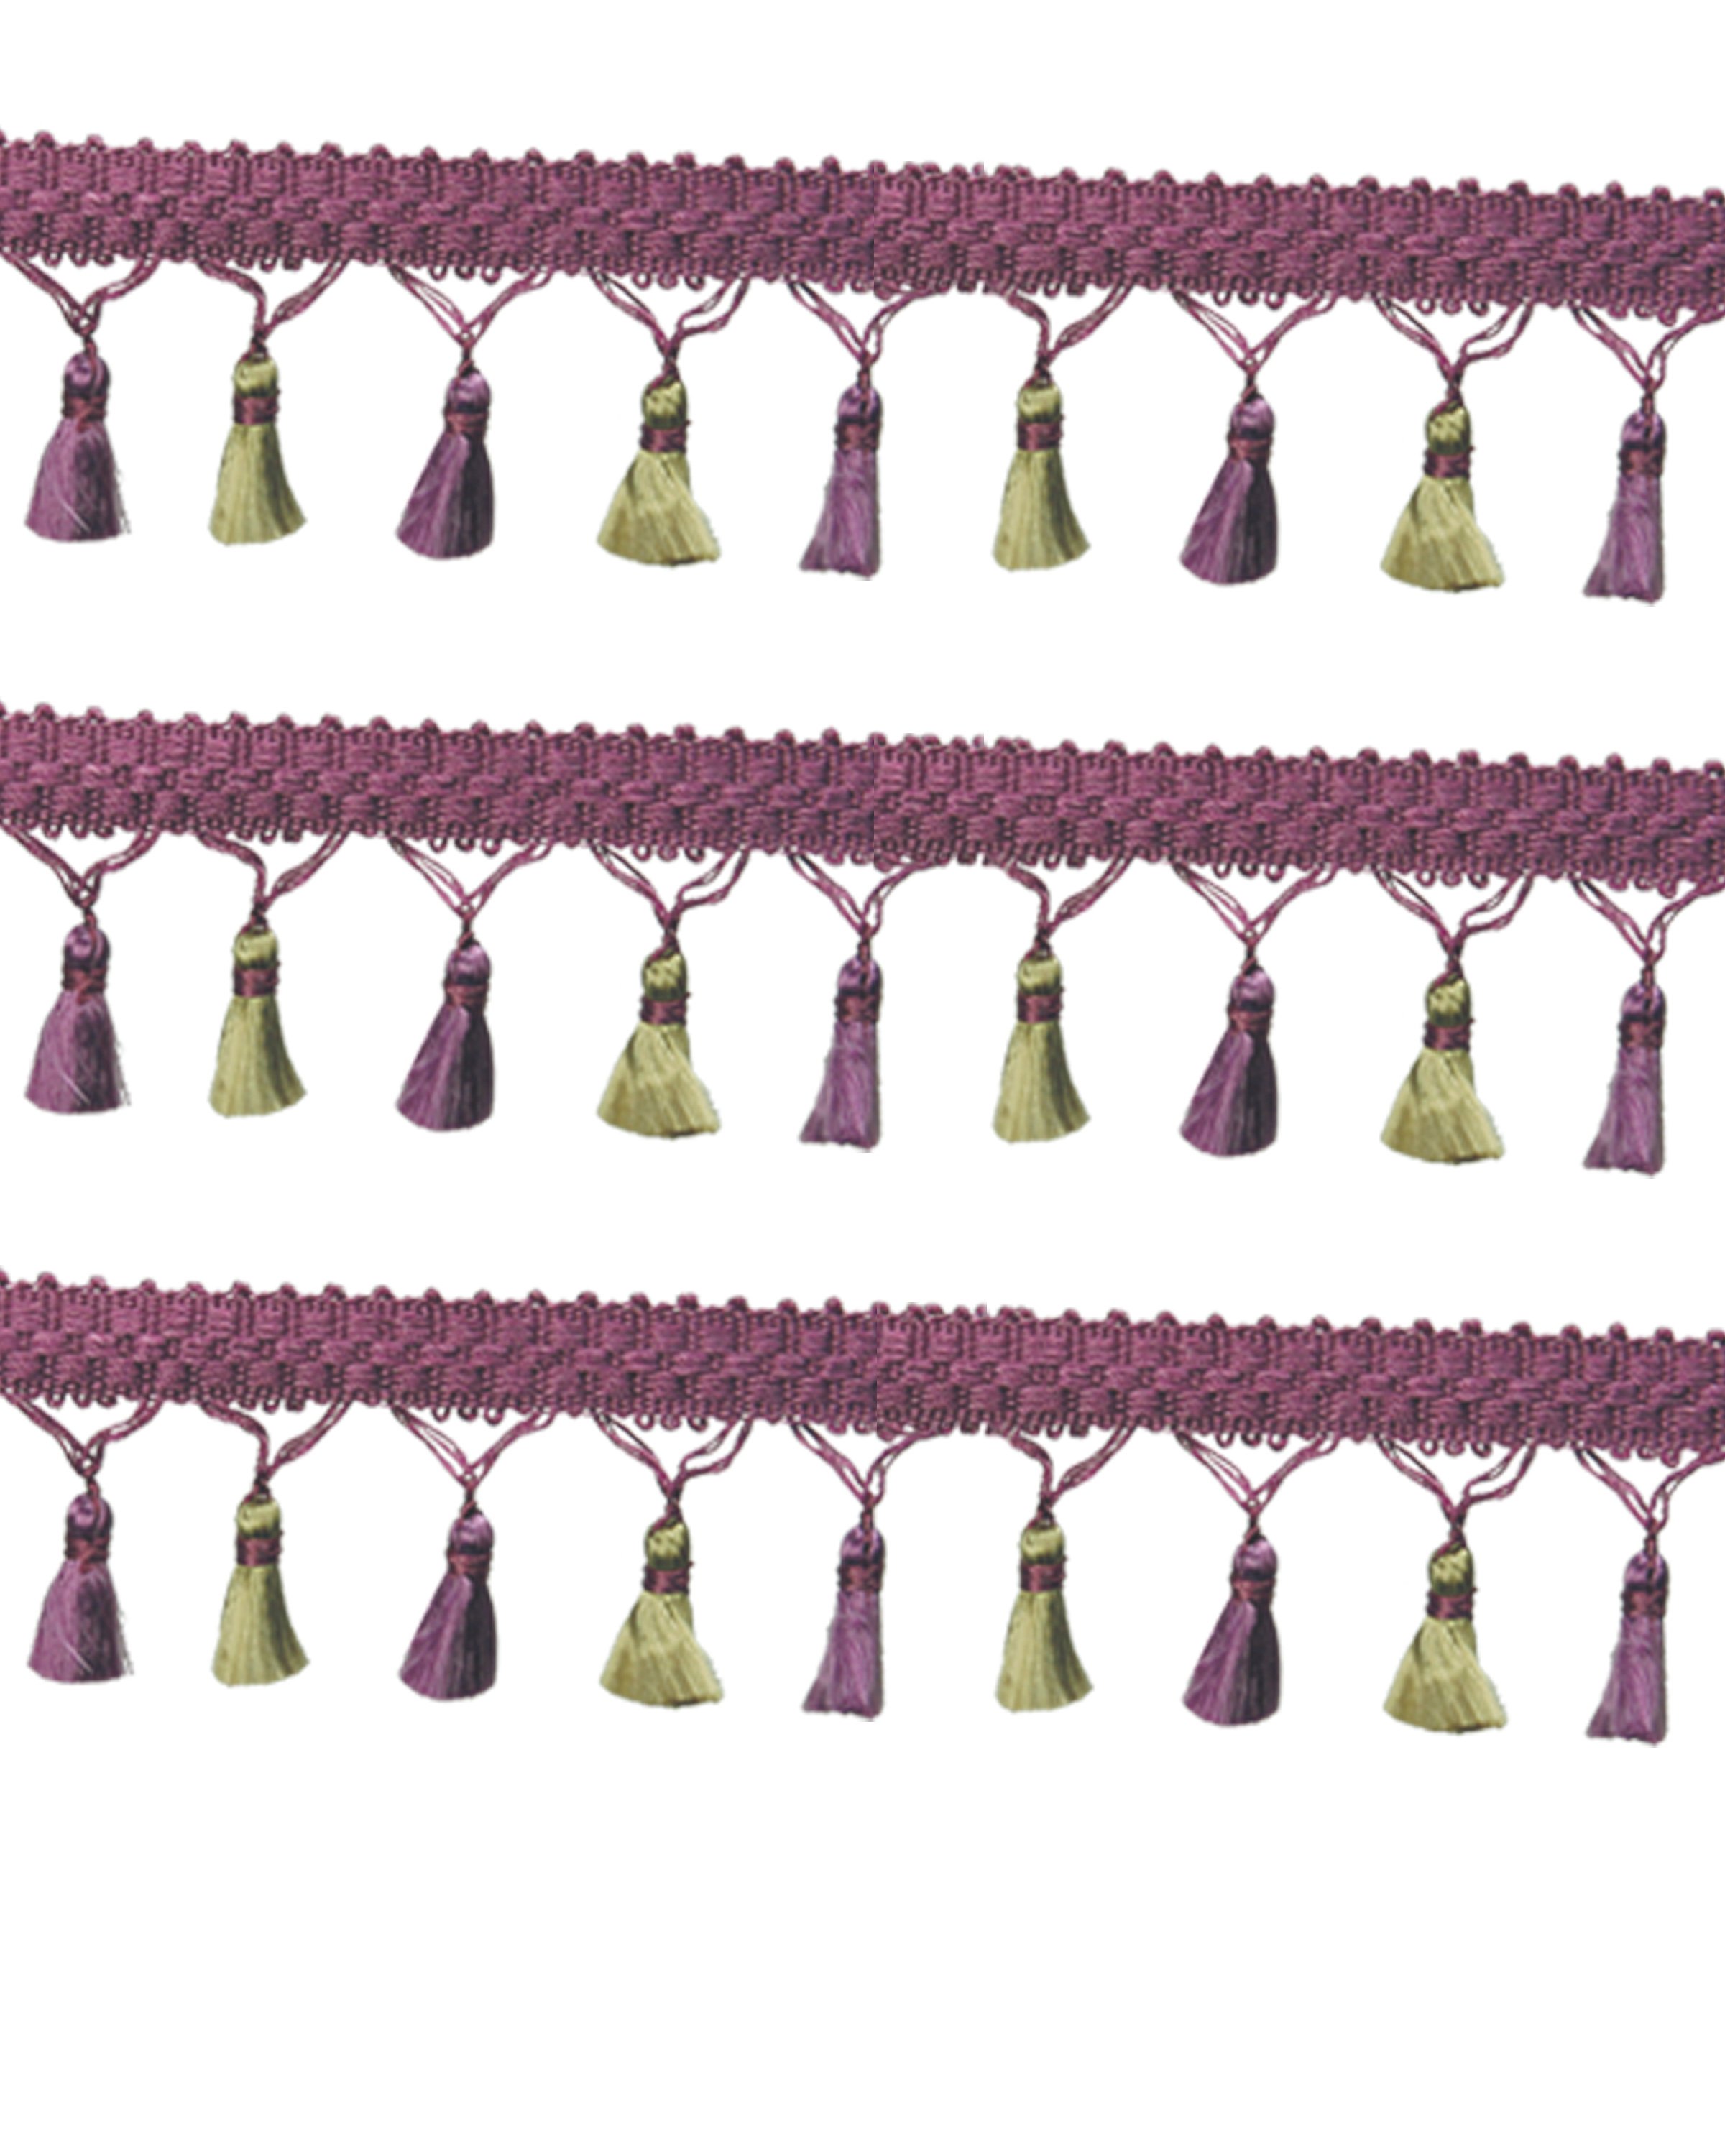 Fringe Tassels - Antique Green / Purple 45mm drop Price is per 5 metres